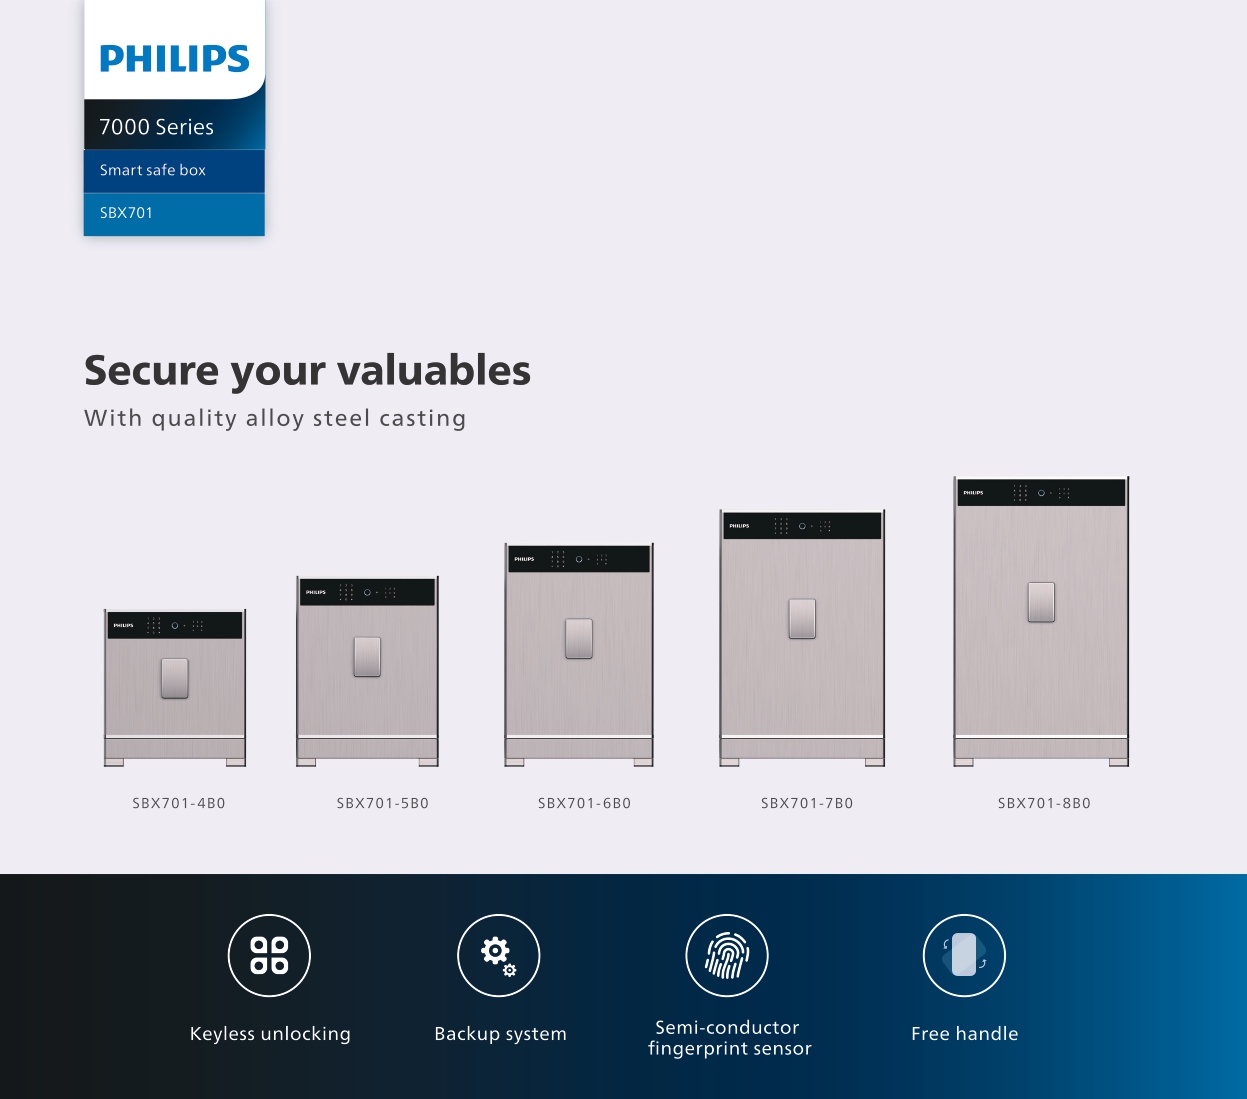 Brochure_Philips Smart Safe Box_EN_20220802 (1)_pages-to-jpg-0004